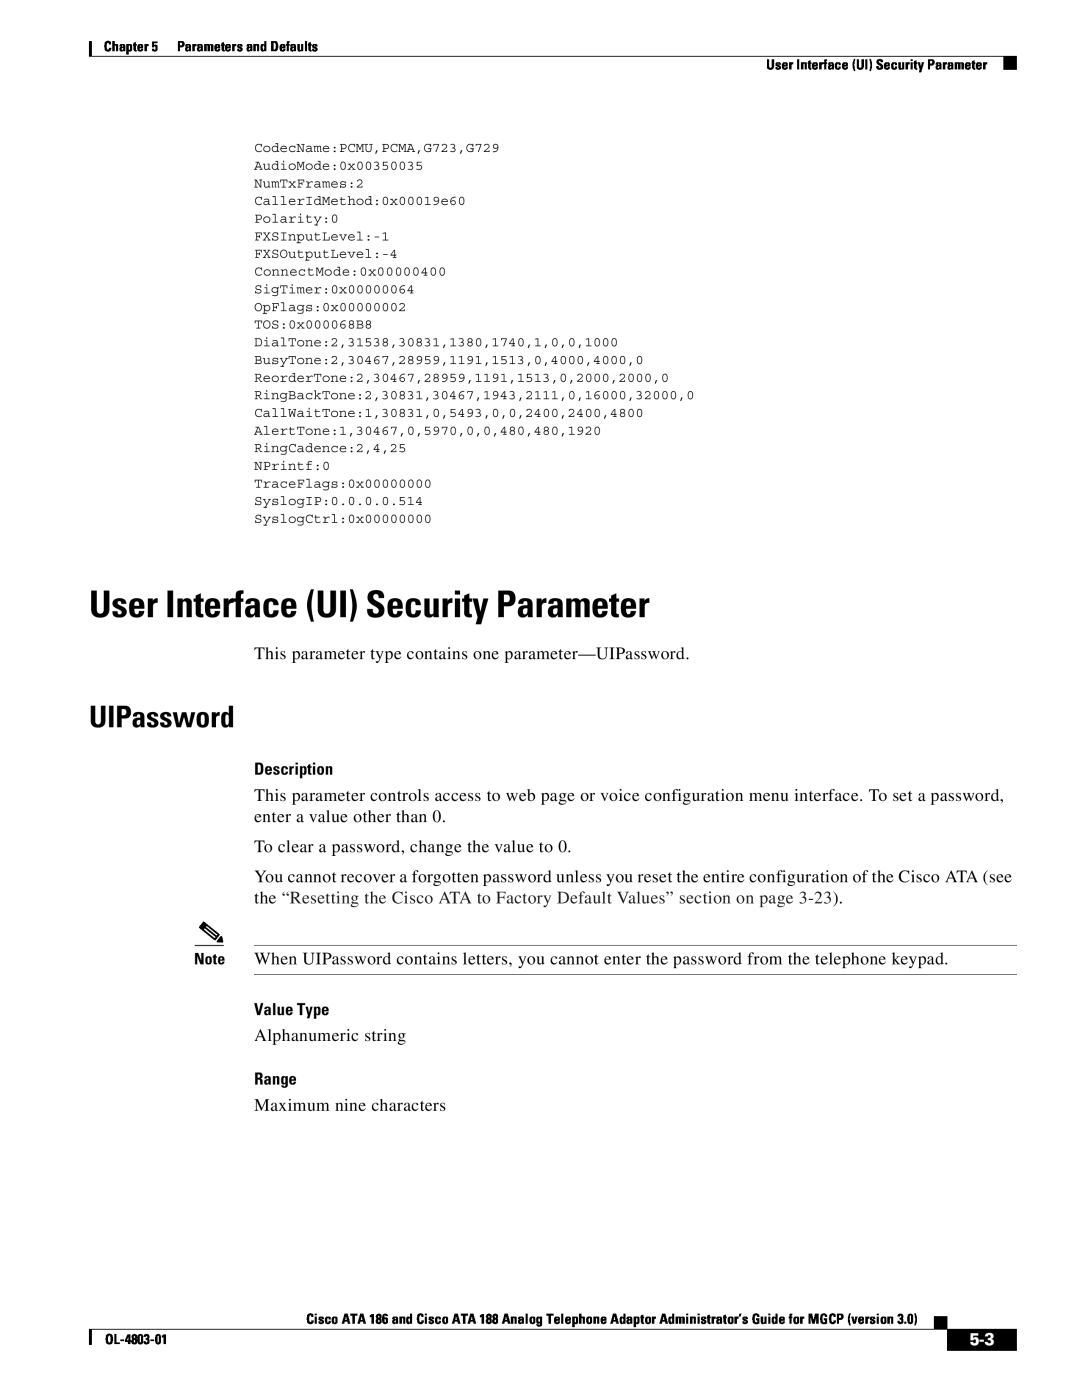 Cisco Systems ATA 188, ATA 186 manual User Interface UI Security Parameter, UIPassword, Value Type, Range, Description 